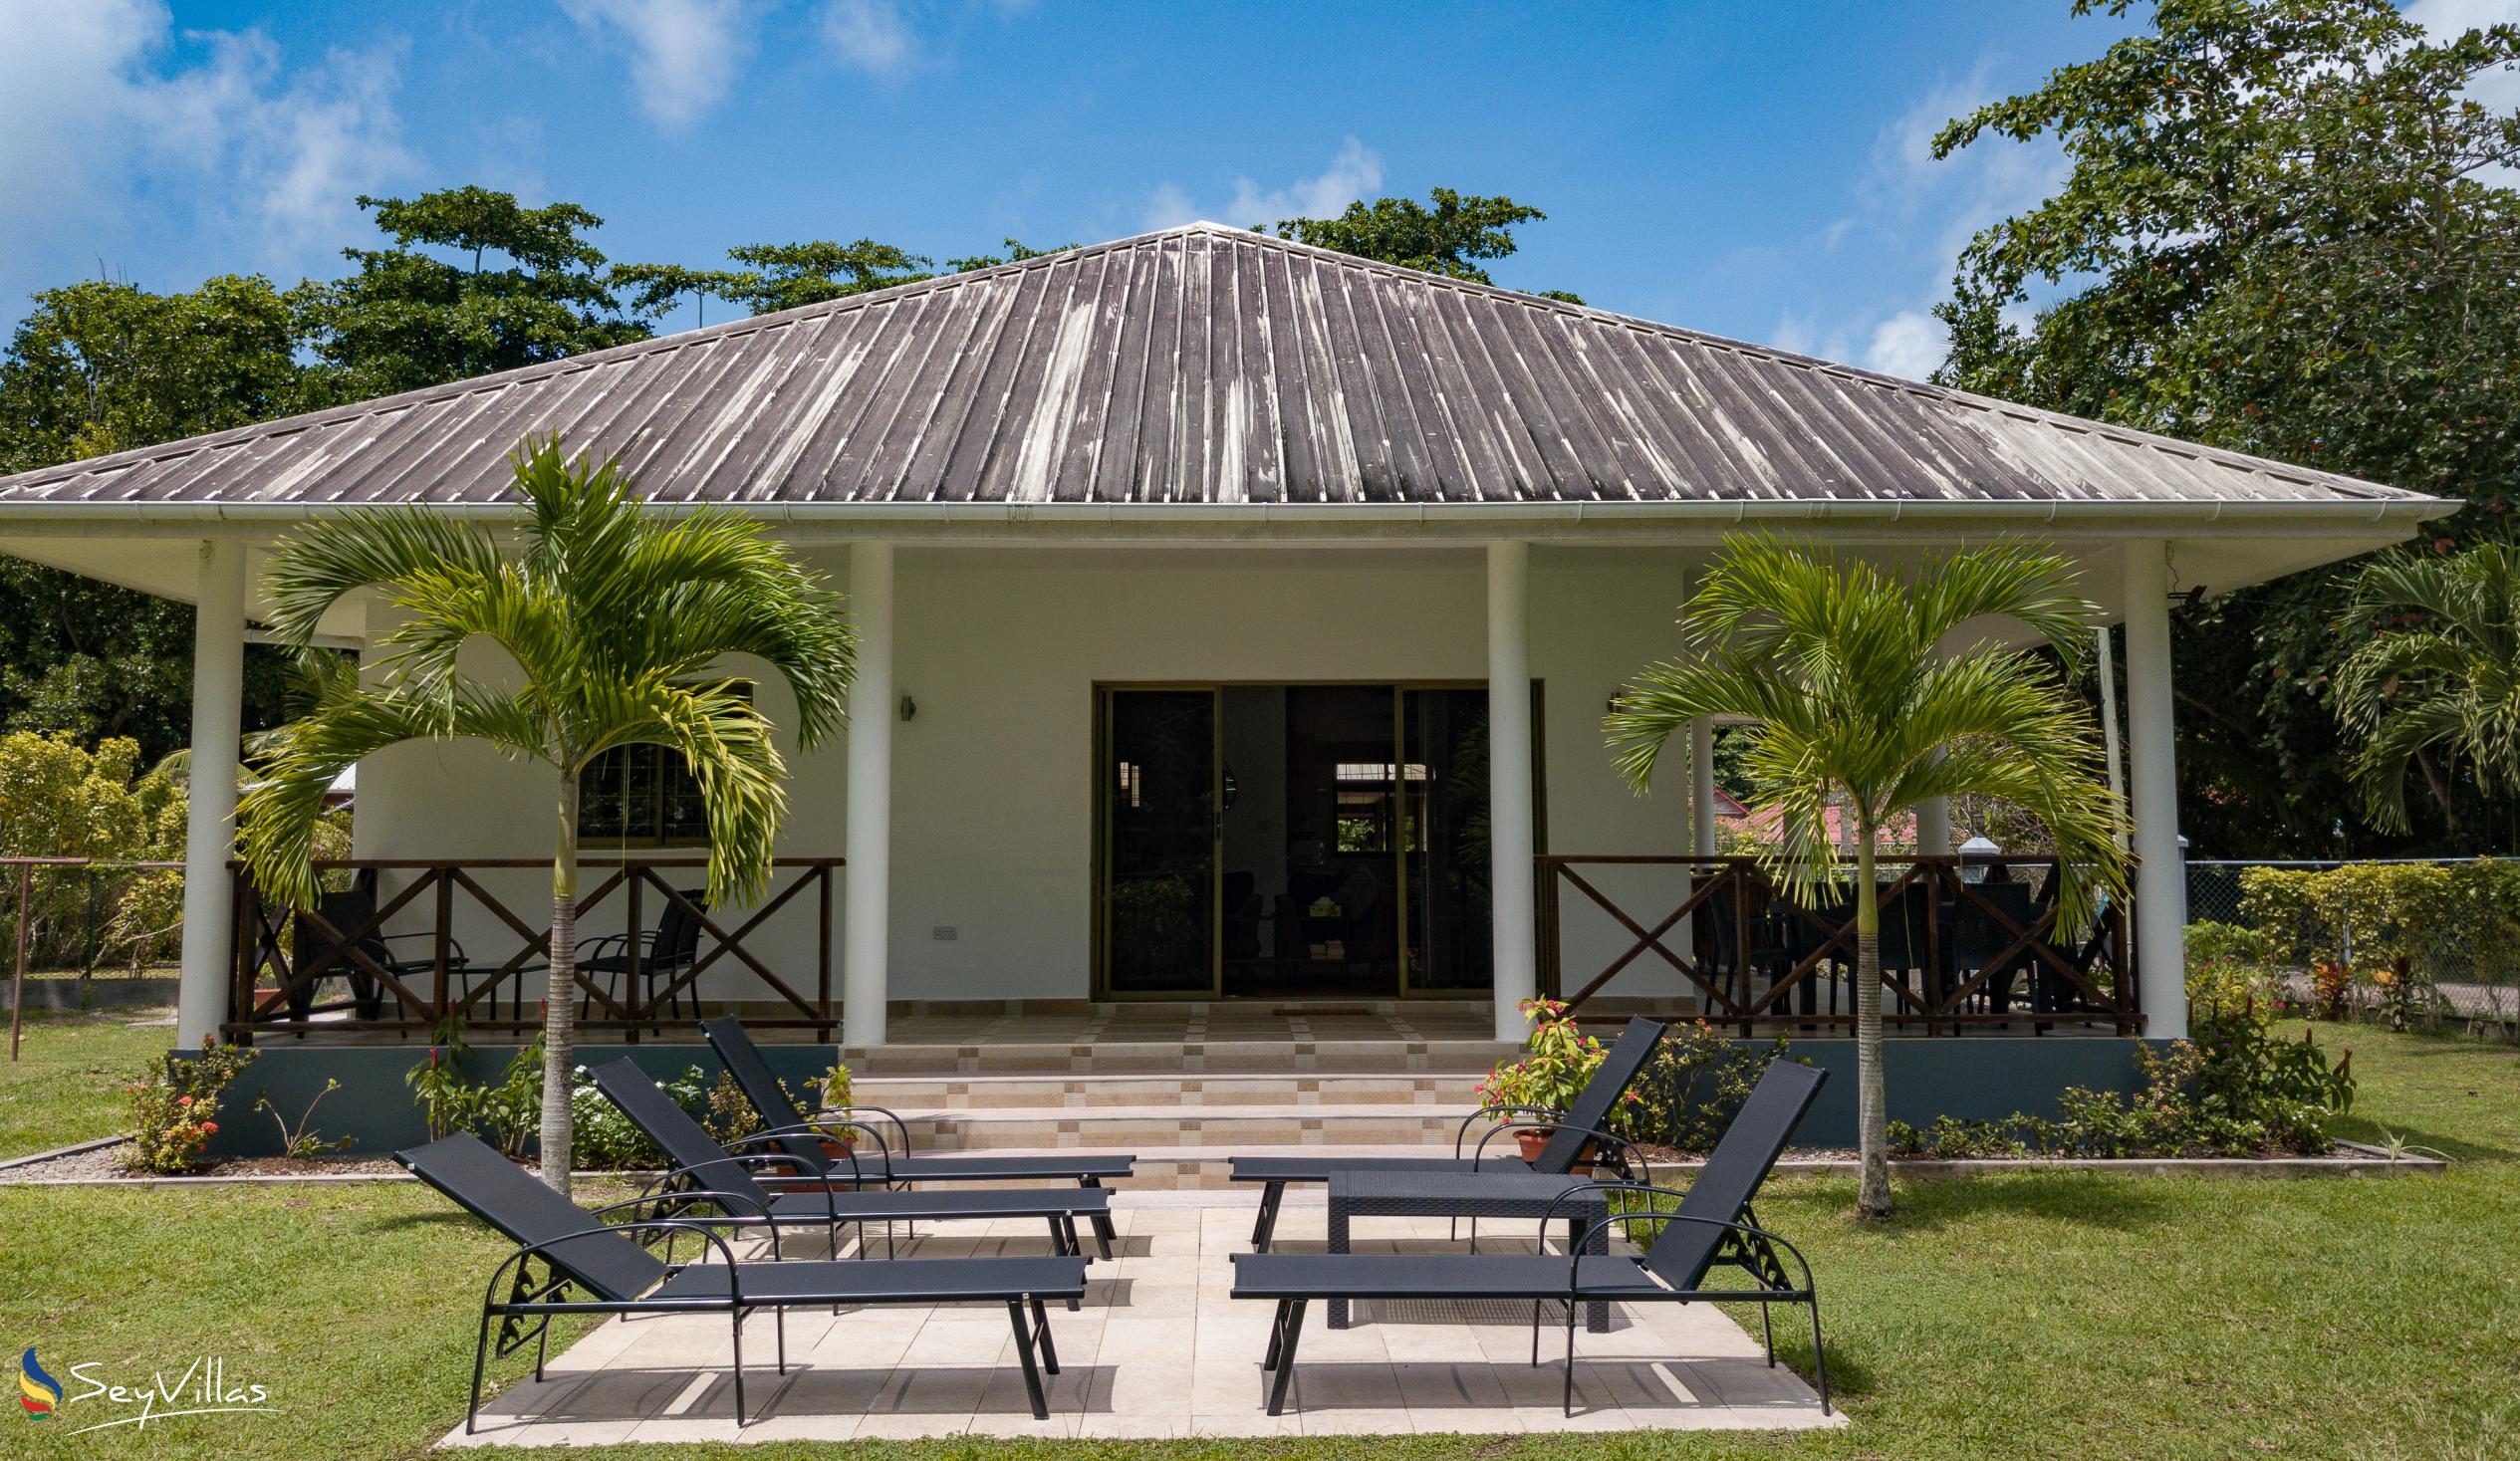 Foto 14: Villa Laure - Villa Laure - Praslin (Seychellen)